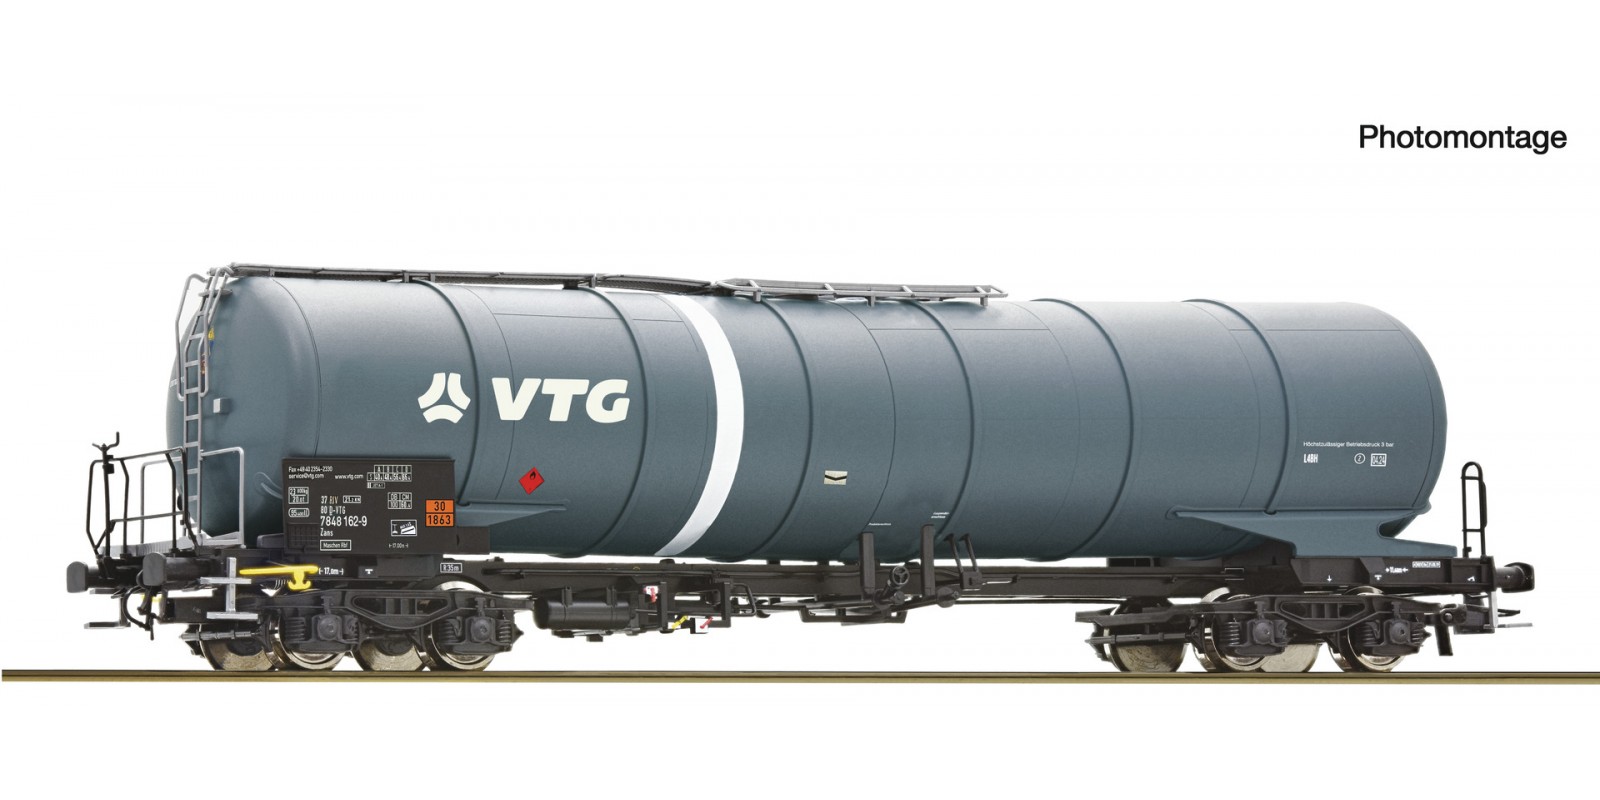 RO6600013 Tank wagon, VTG